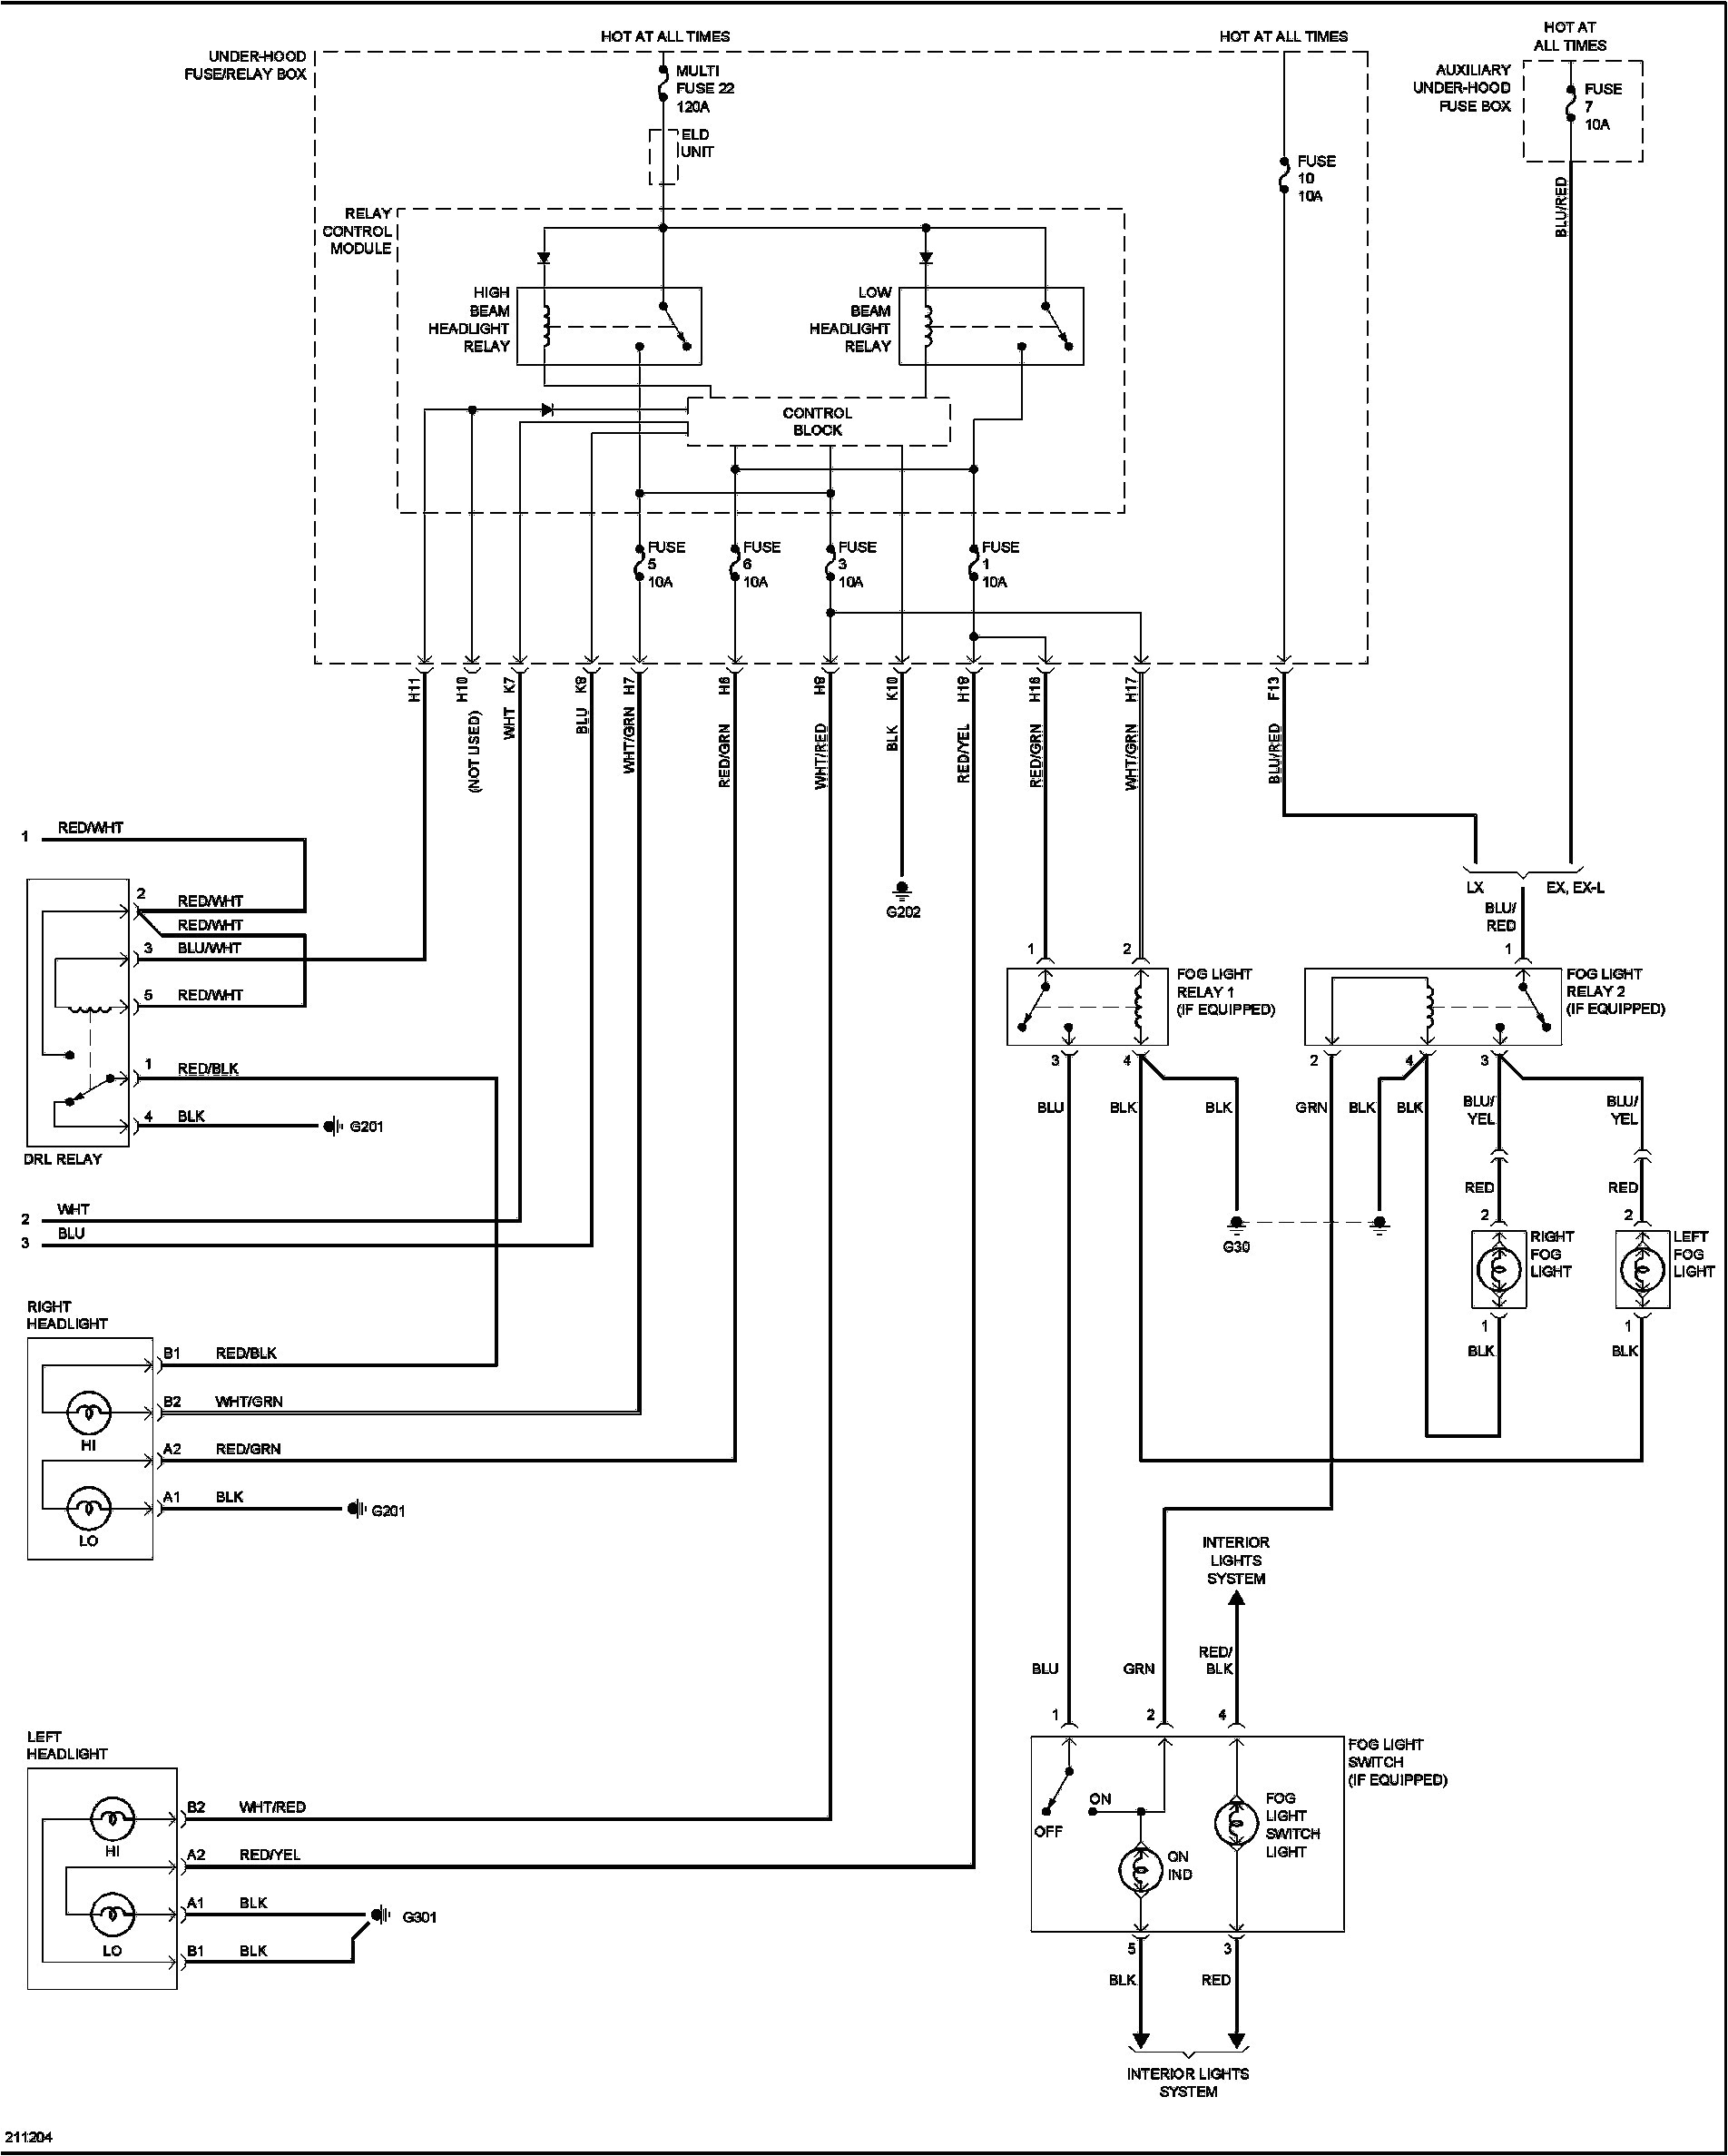 1976 honda civic wiring diagram schema wiring diagram1999 honda civic ignition wiring wiring diagram toolbox 1976